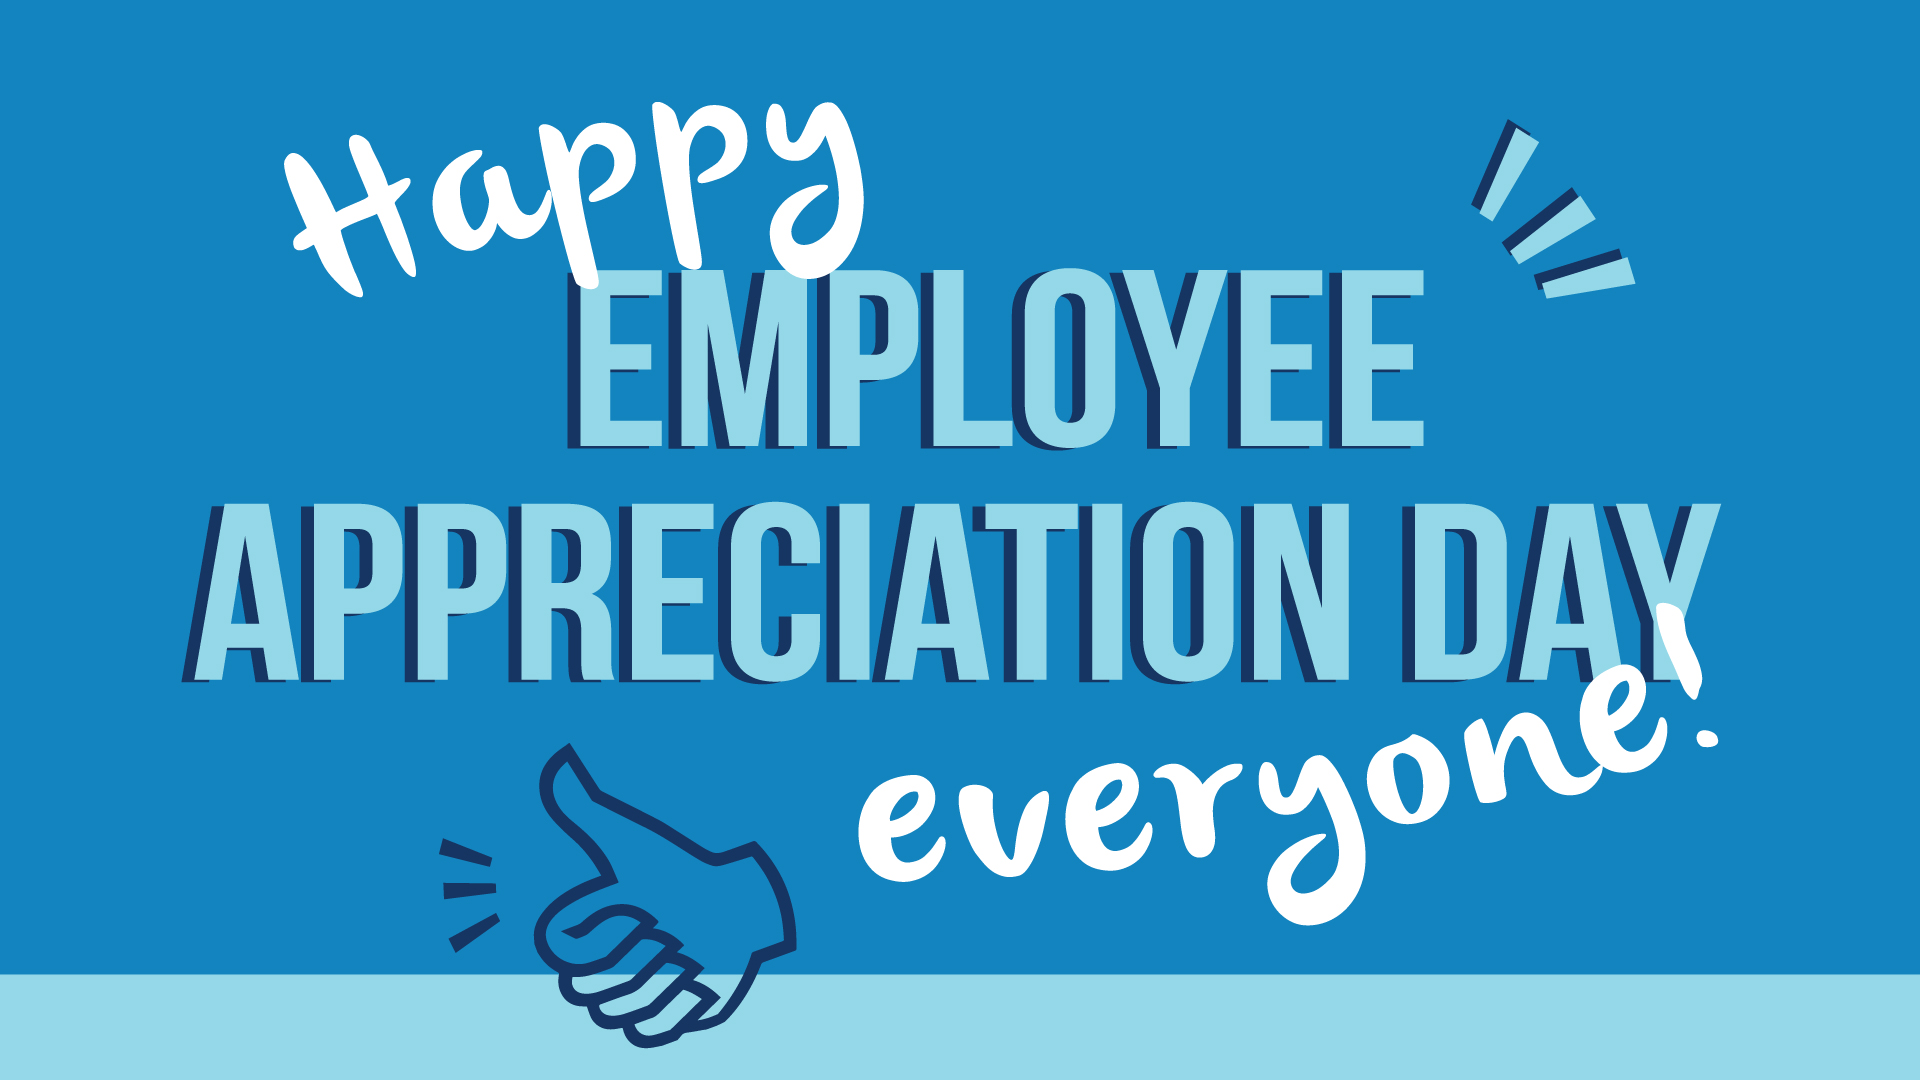 Employee Appreciation Day Quotes. QuotesGram